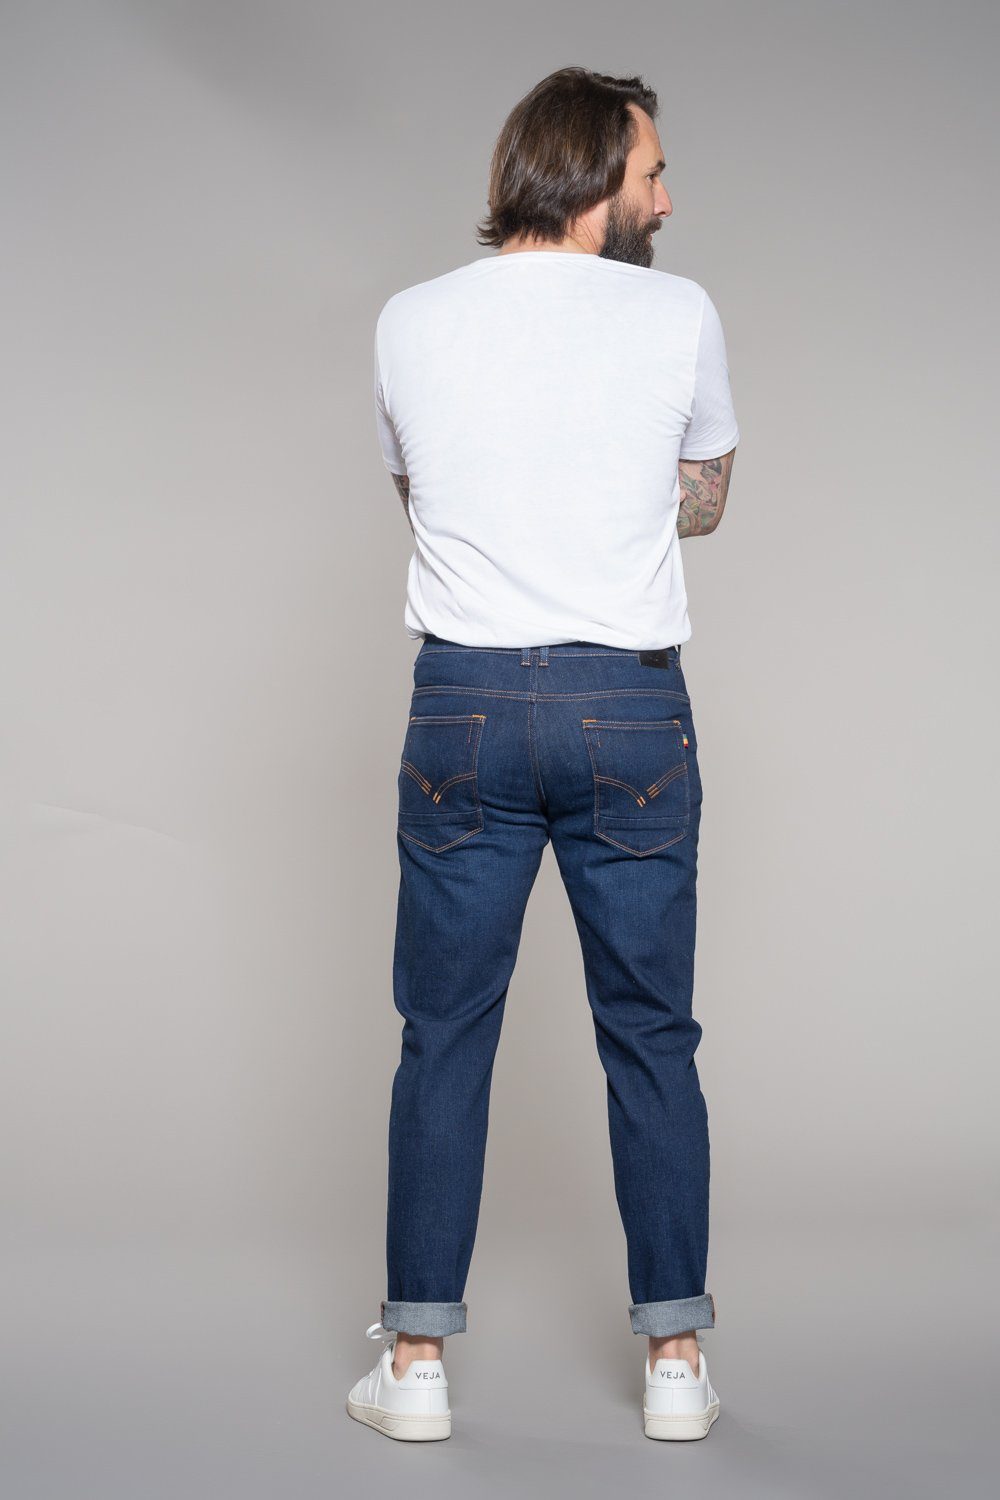 Feuervogl Slim-fit-Jeans Fit, 5-Pocket-Style, Unisex Classic Fit, Blue Slim Waist Unisex, fv-West:minster, Waist, Slim Medium Medium